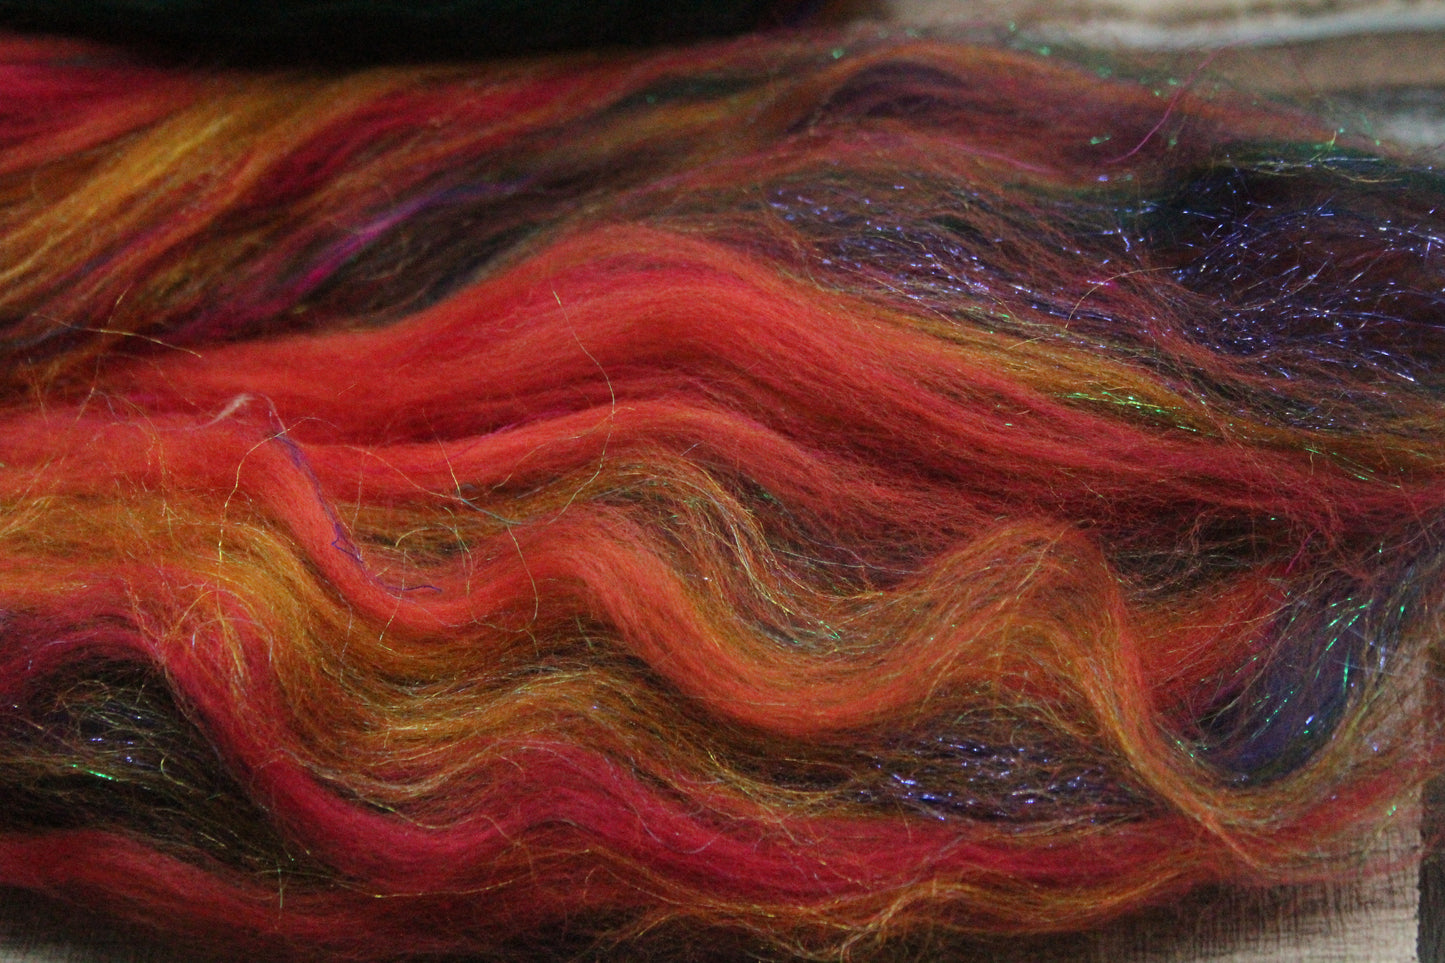 Merino Wool Blend - Green Orange Pink - 47 grams / 1.6 oz  - Fibre for felting, weaving or spinning